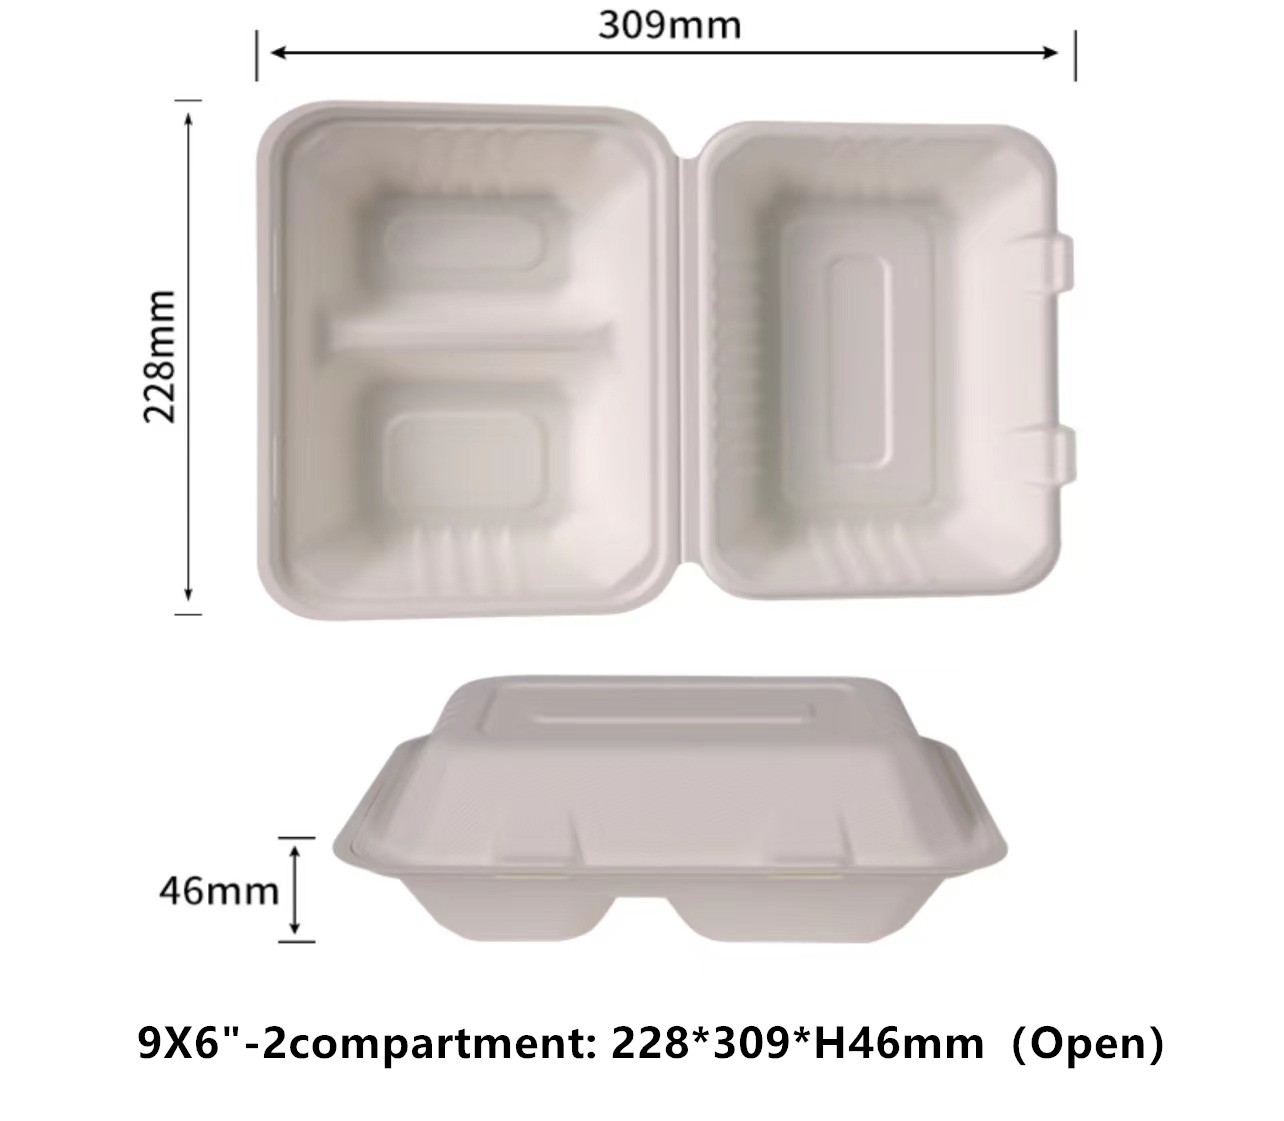 Clamshell 9X6 pulgadas 2 compartimentos para llevar contenedores de alimentos 100% compostables desechables para llevar cajas resistentes para llevar contenedores ecológicos biodegradables para llevar para alimentos